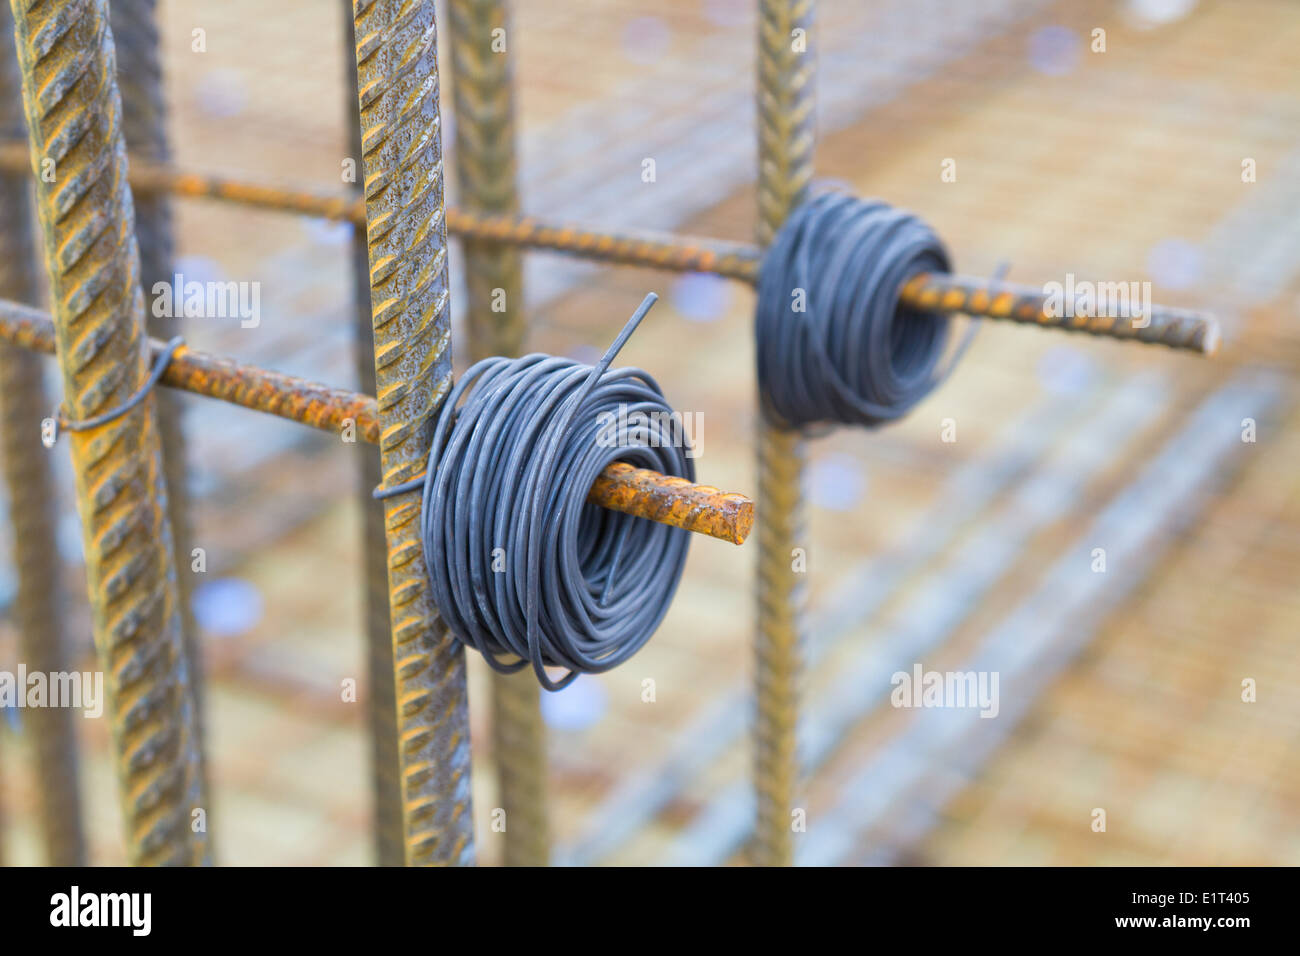 Steel wire used for tying reinforcement in concrete floors columns and beams, seen in Copenhagen Denmark Stock Photo